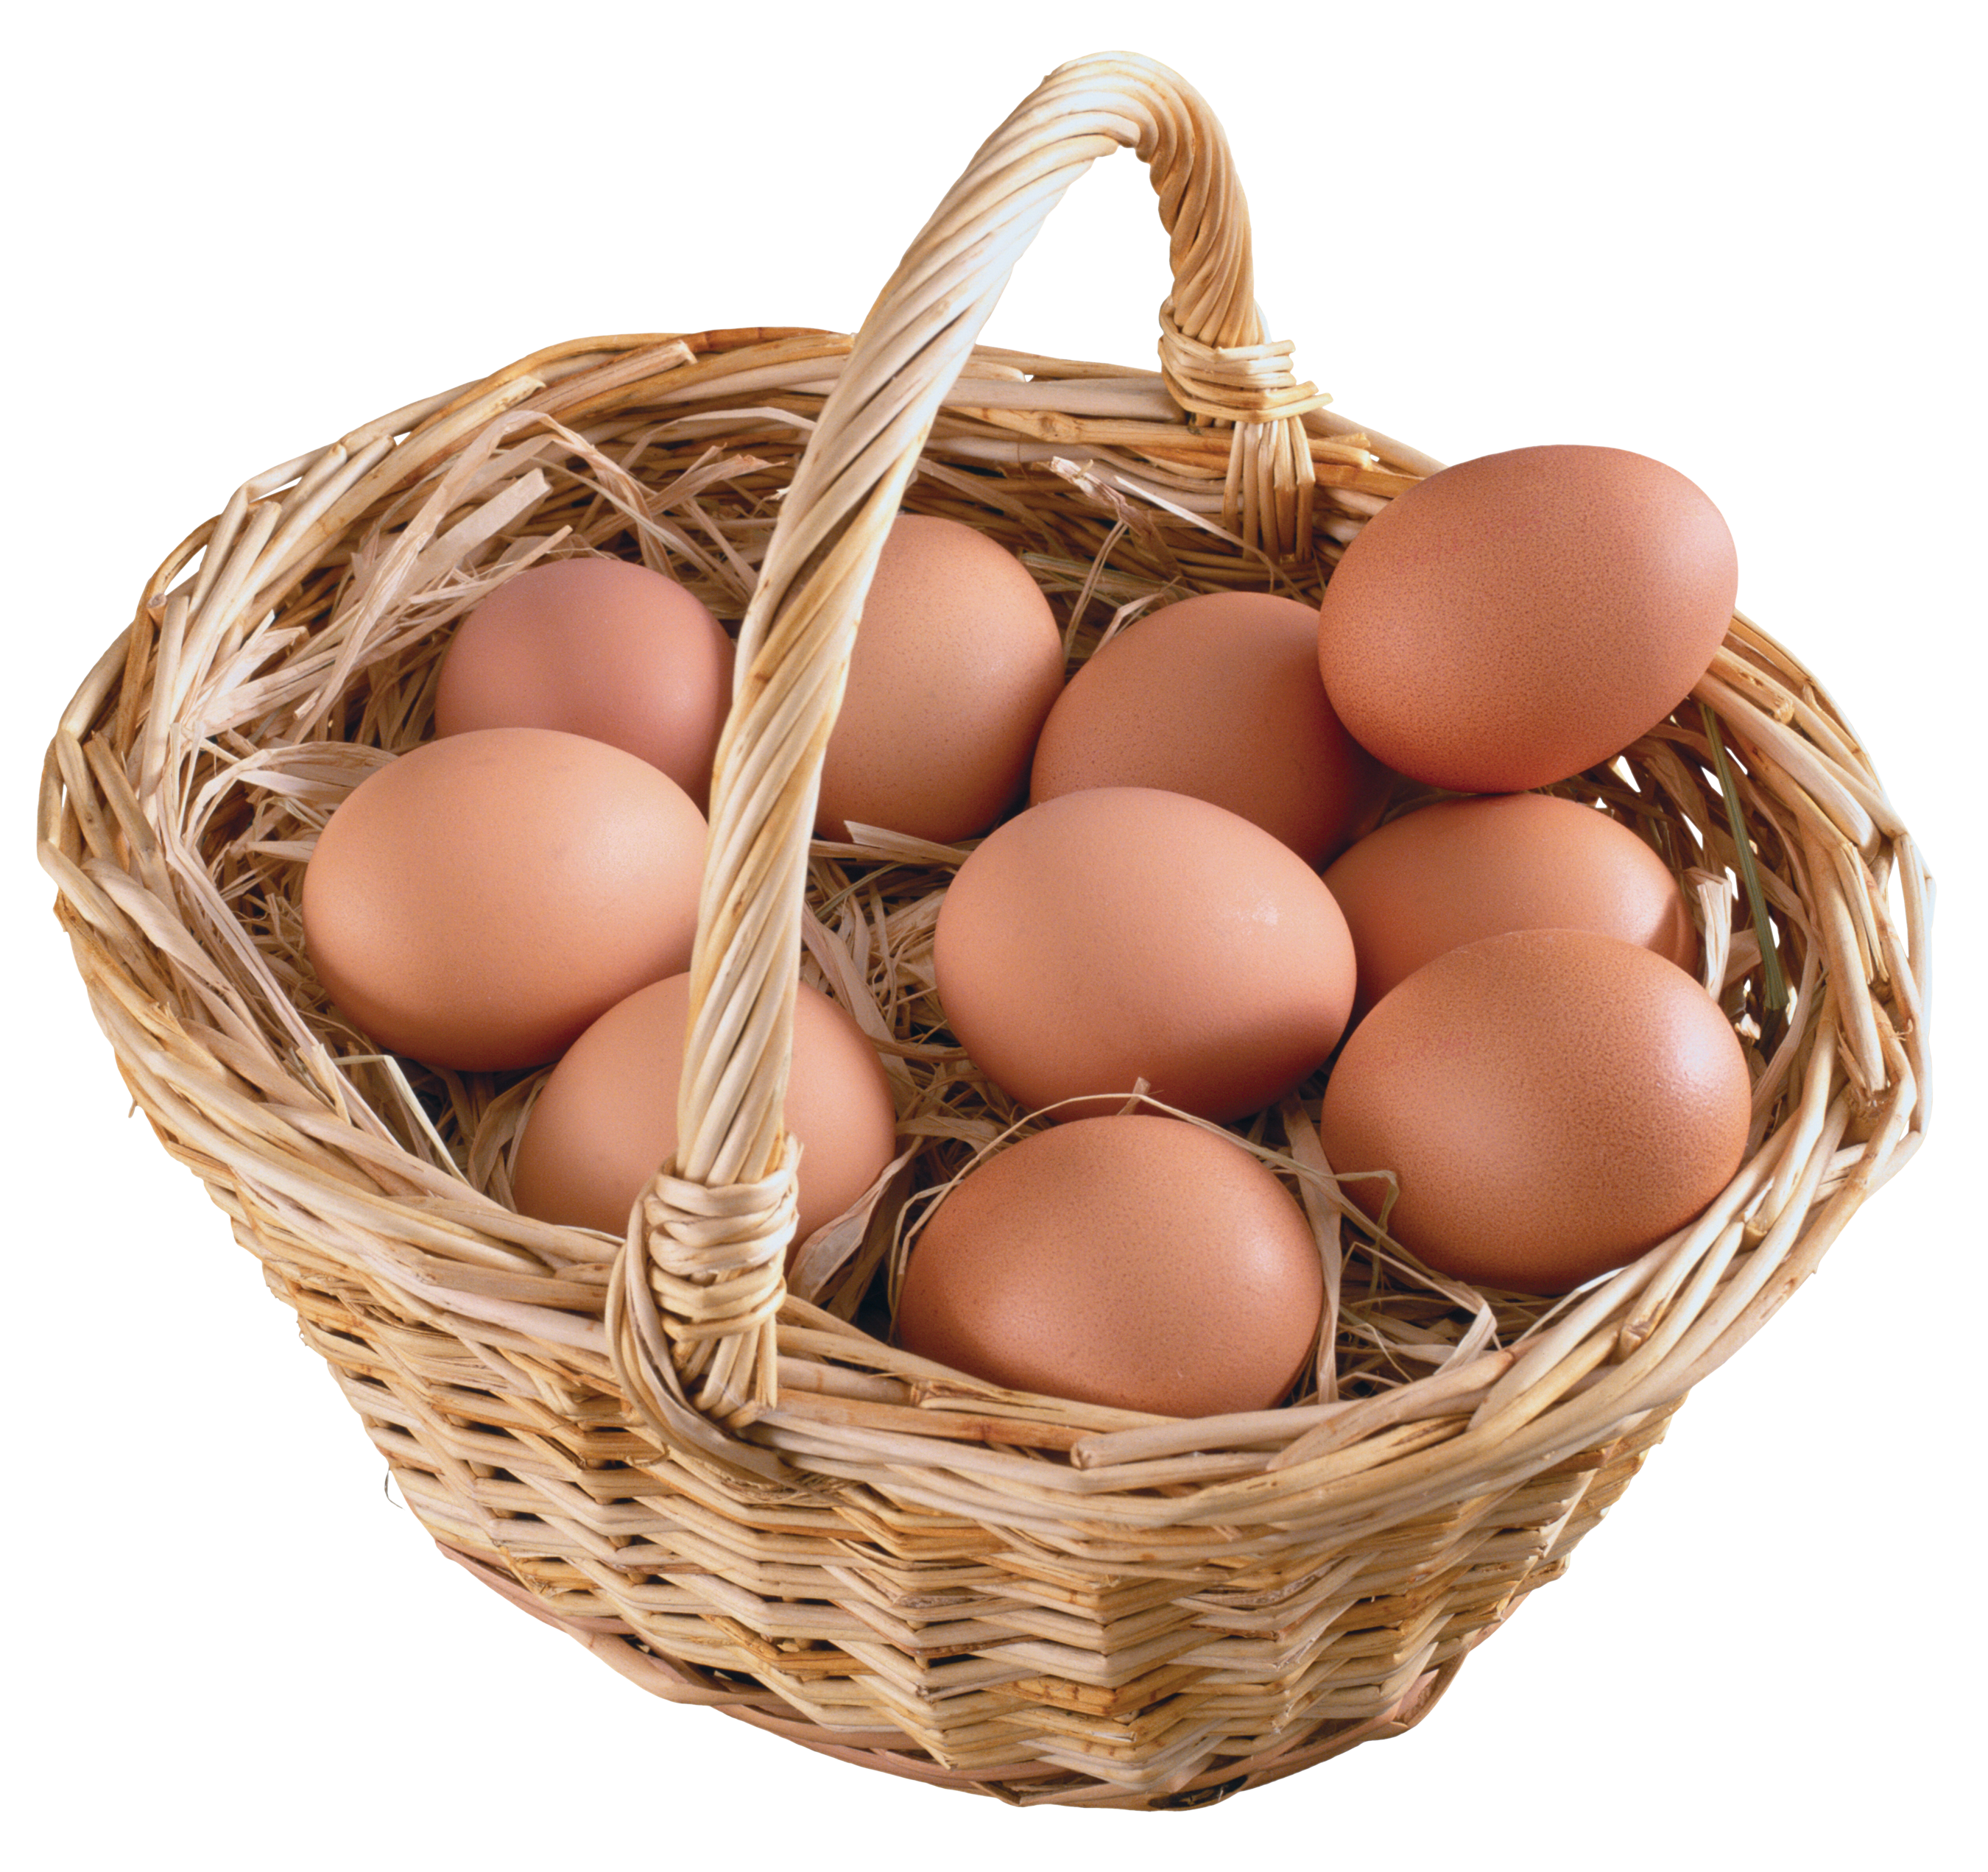 Eggs Basket Four | Isolated Stock Photo by noBACKS.com